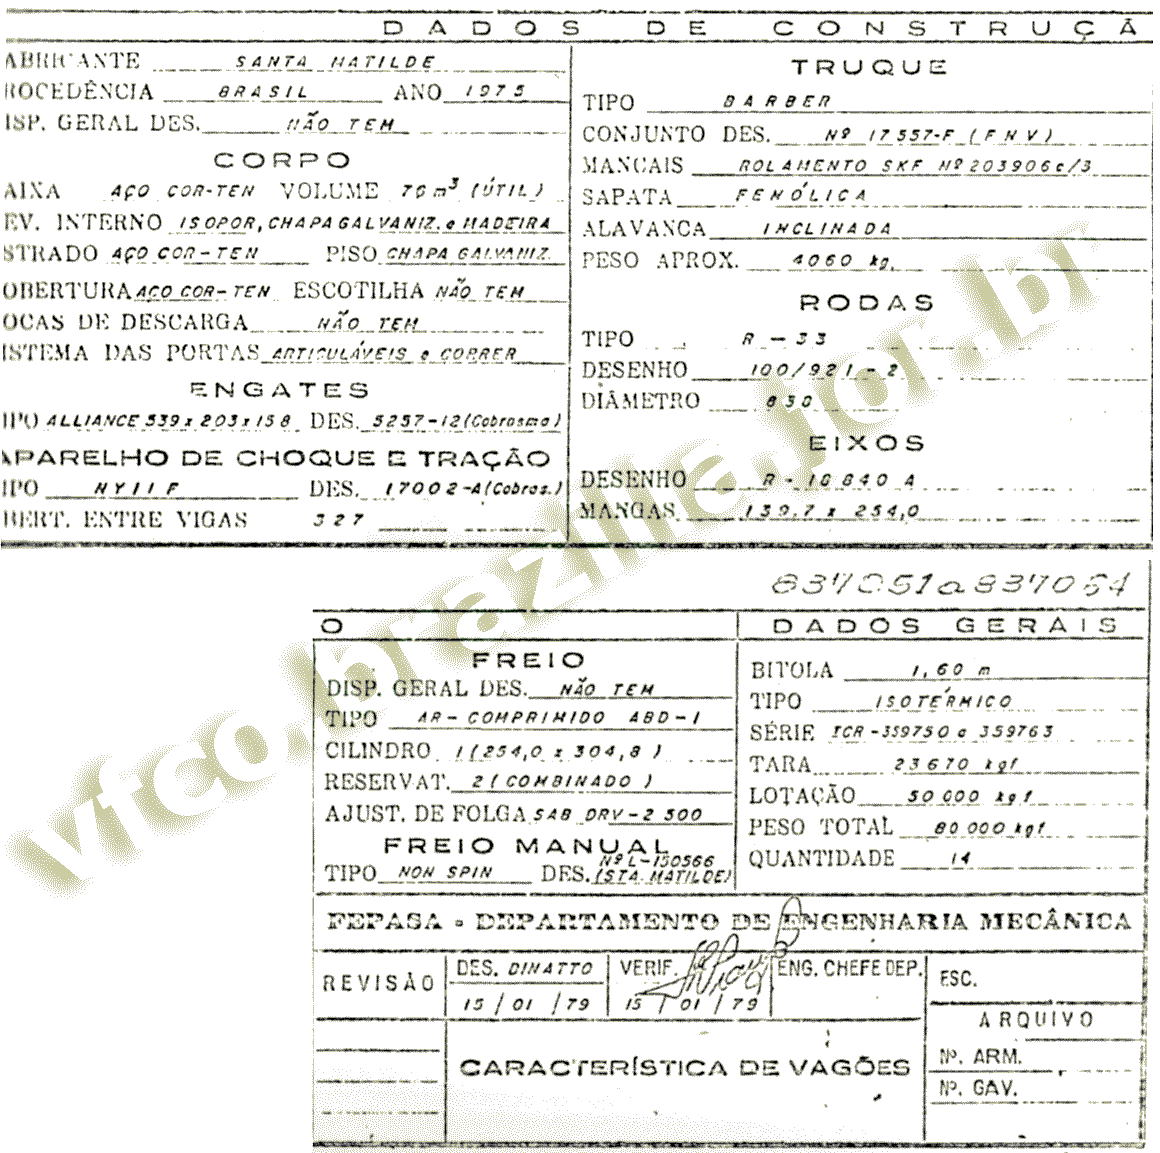 Características dos vagões isotérmicos ICR-359750-359763 Fepasa - Ferrovias Paulistas